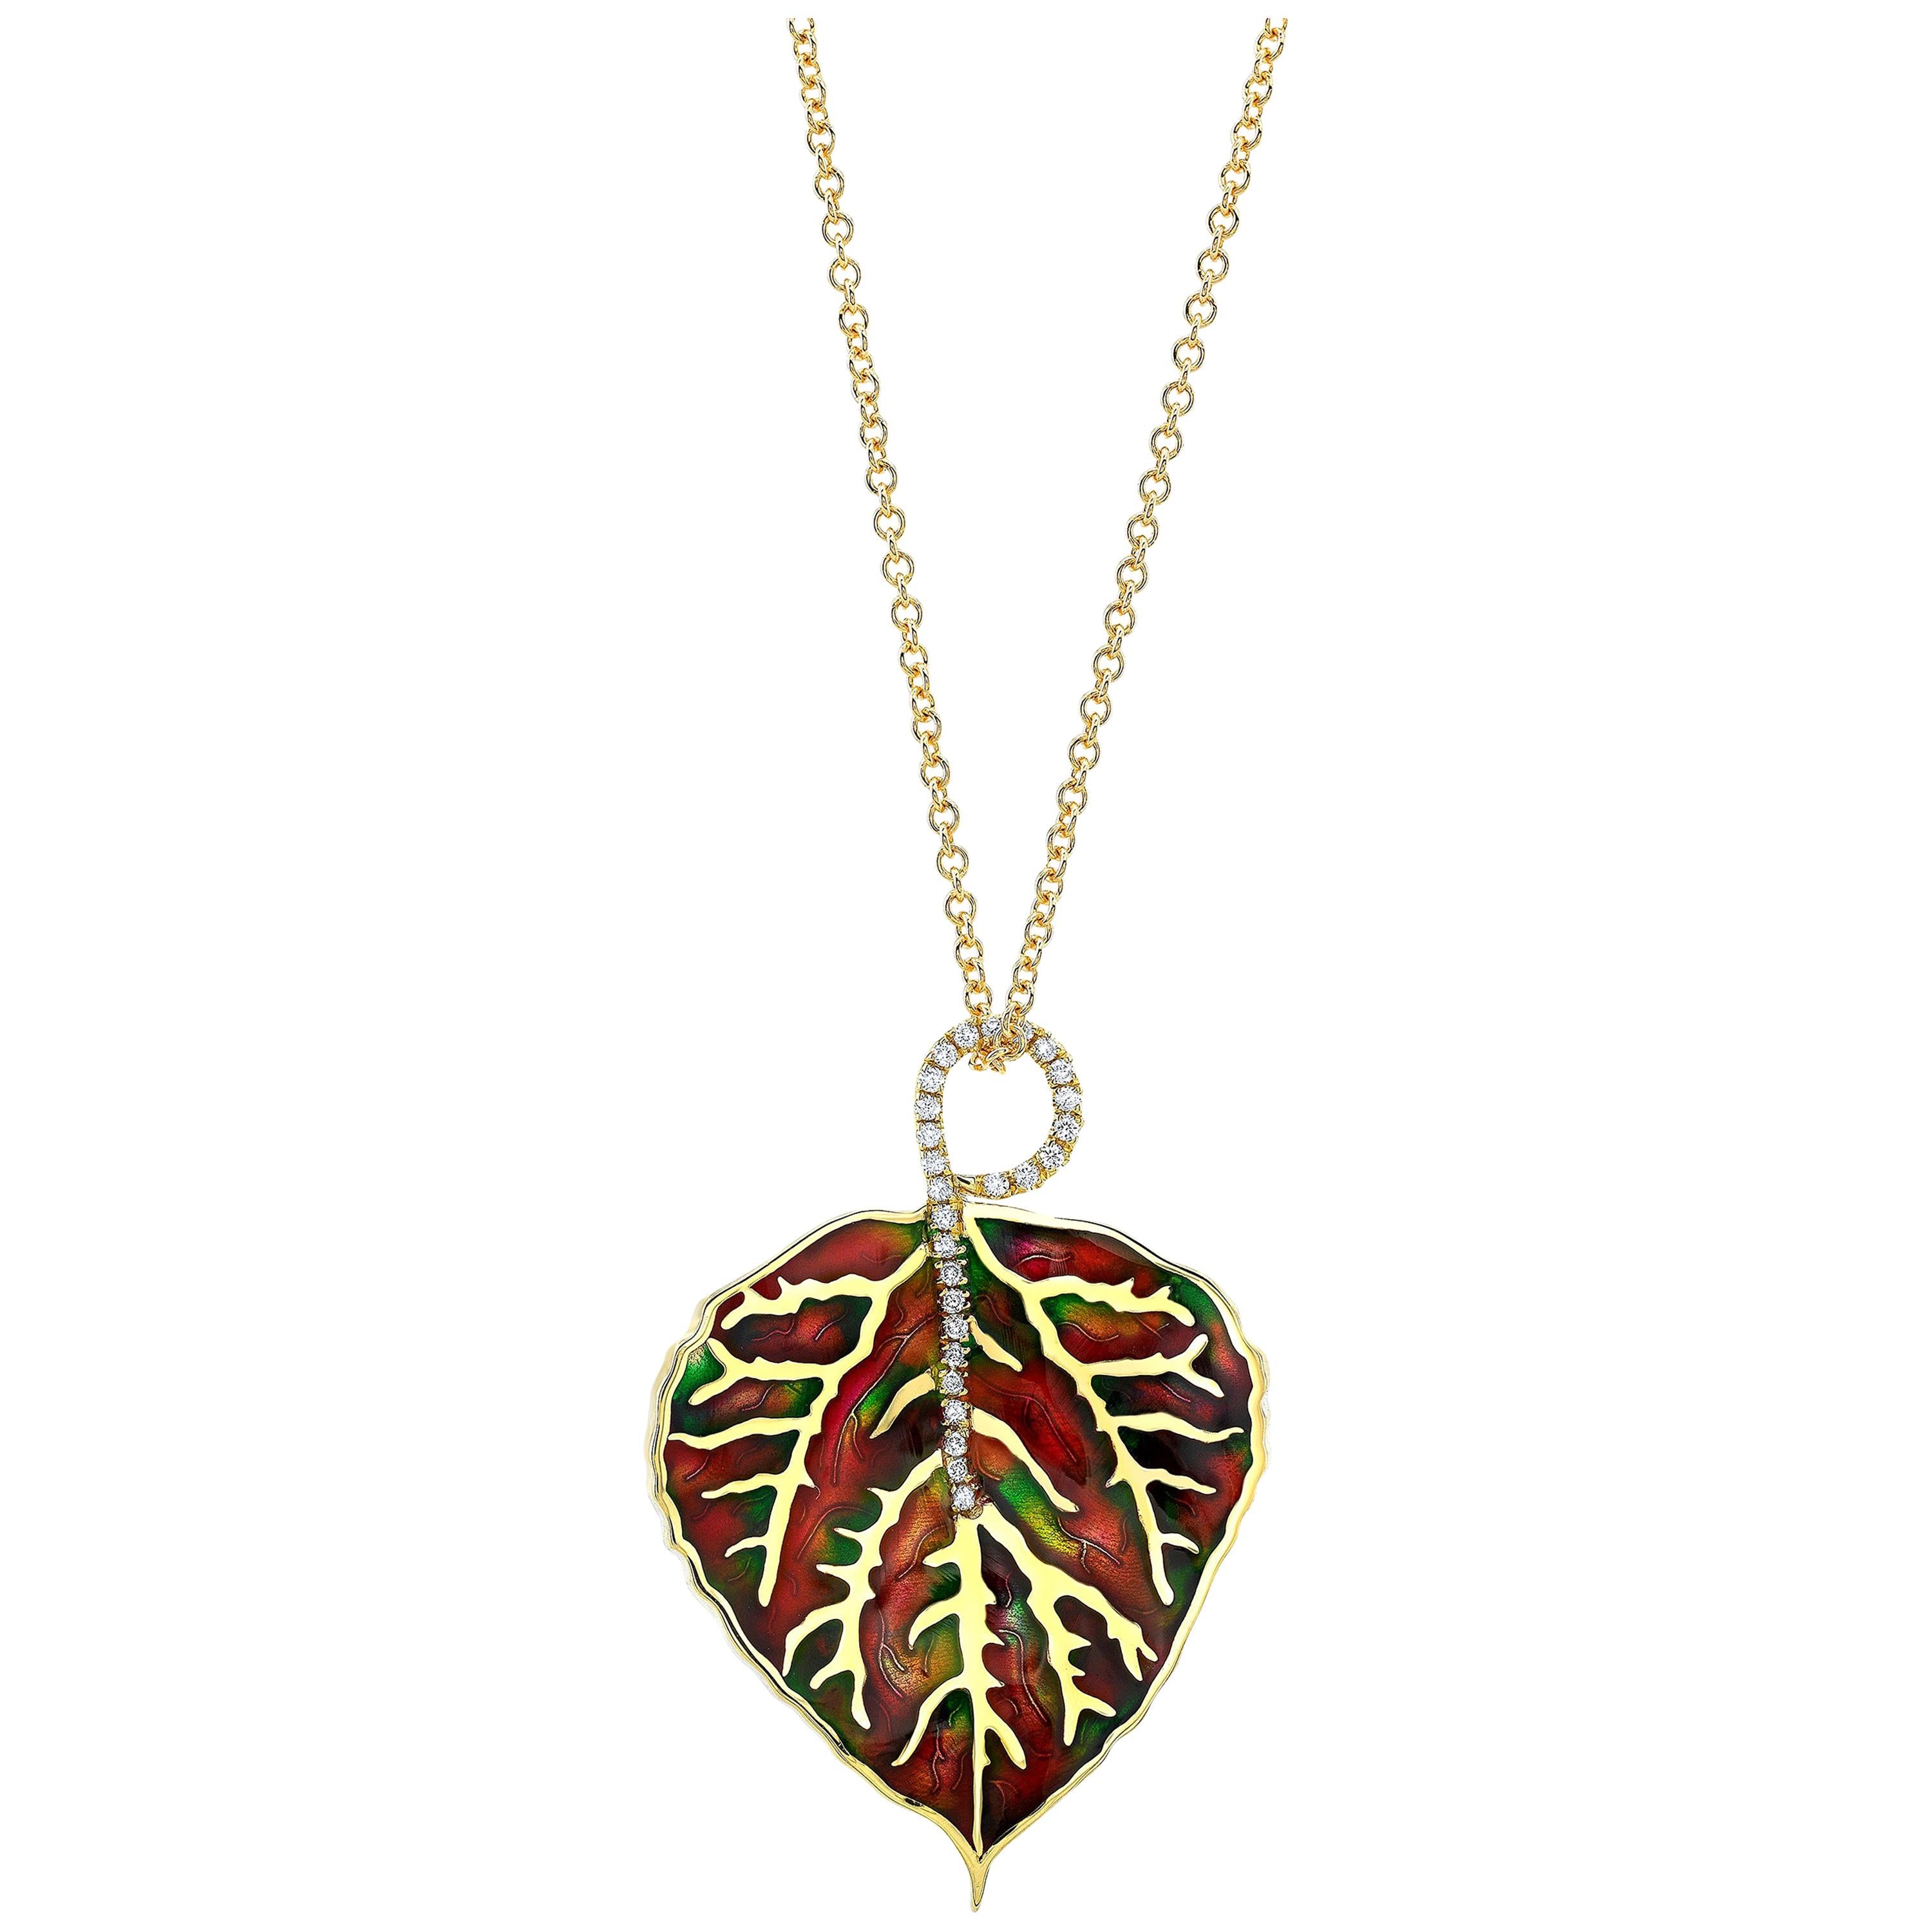 Amy Y 18K Gold, Diamond and Enamel Contemporary Pendant/Necklace 'Aspen Leaf'